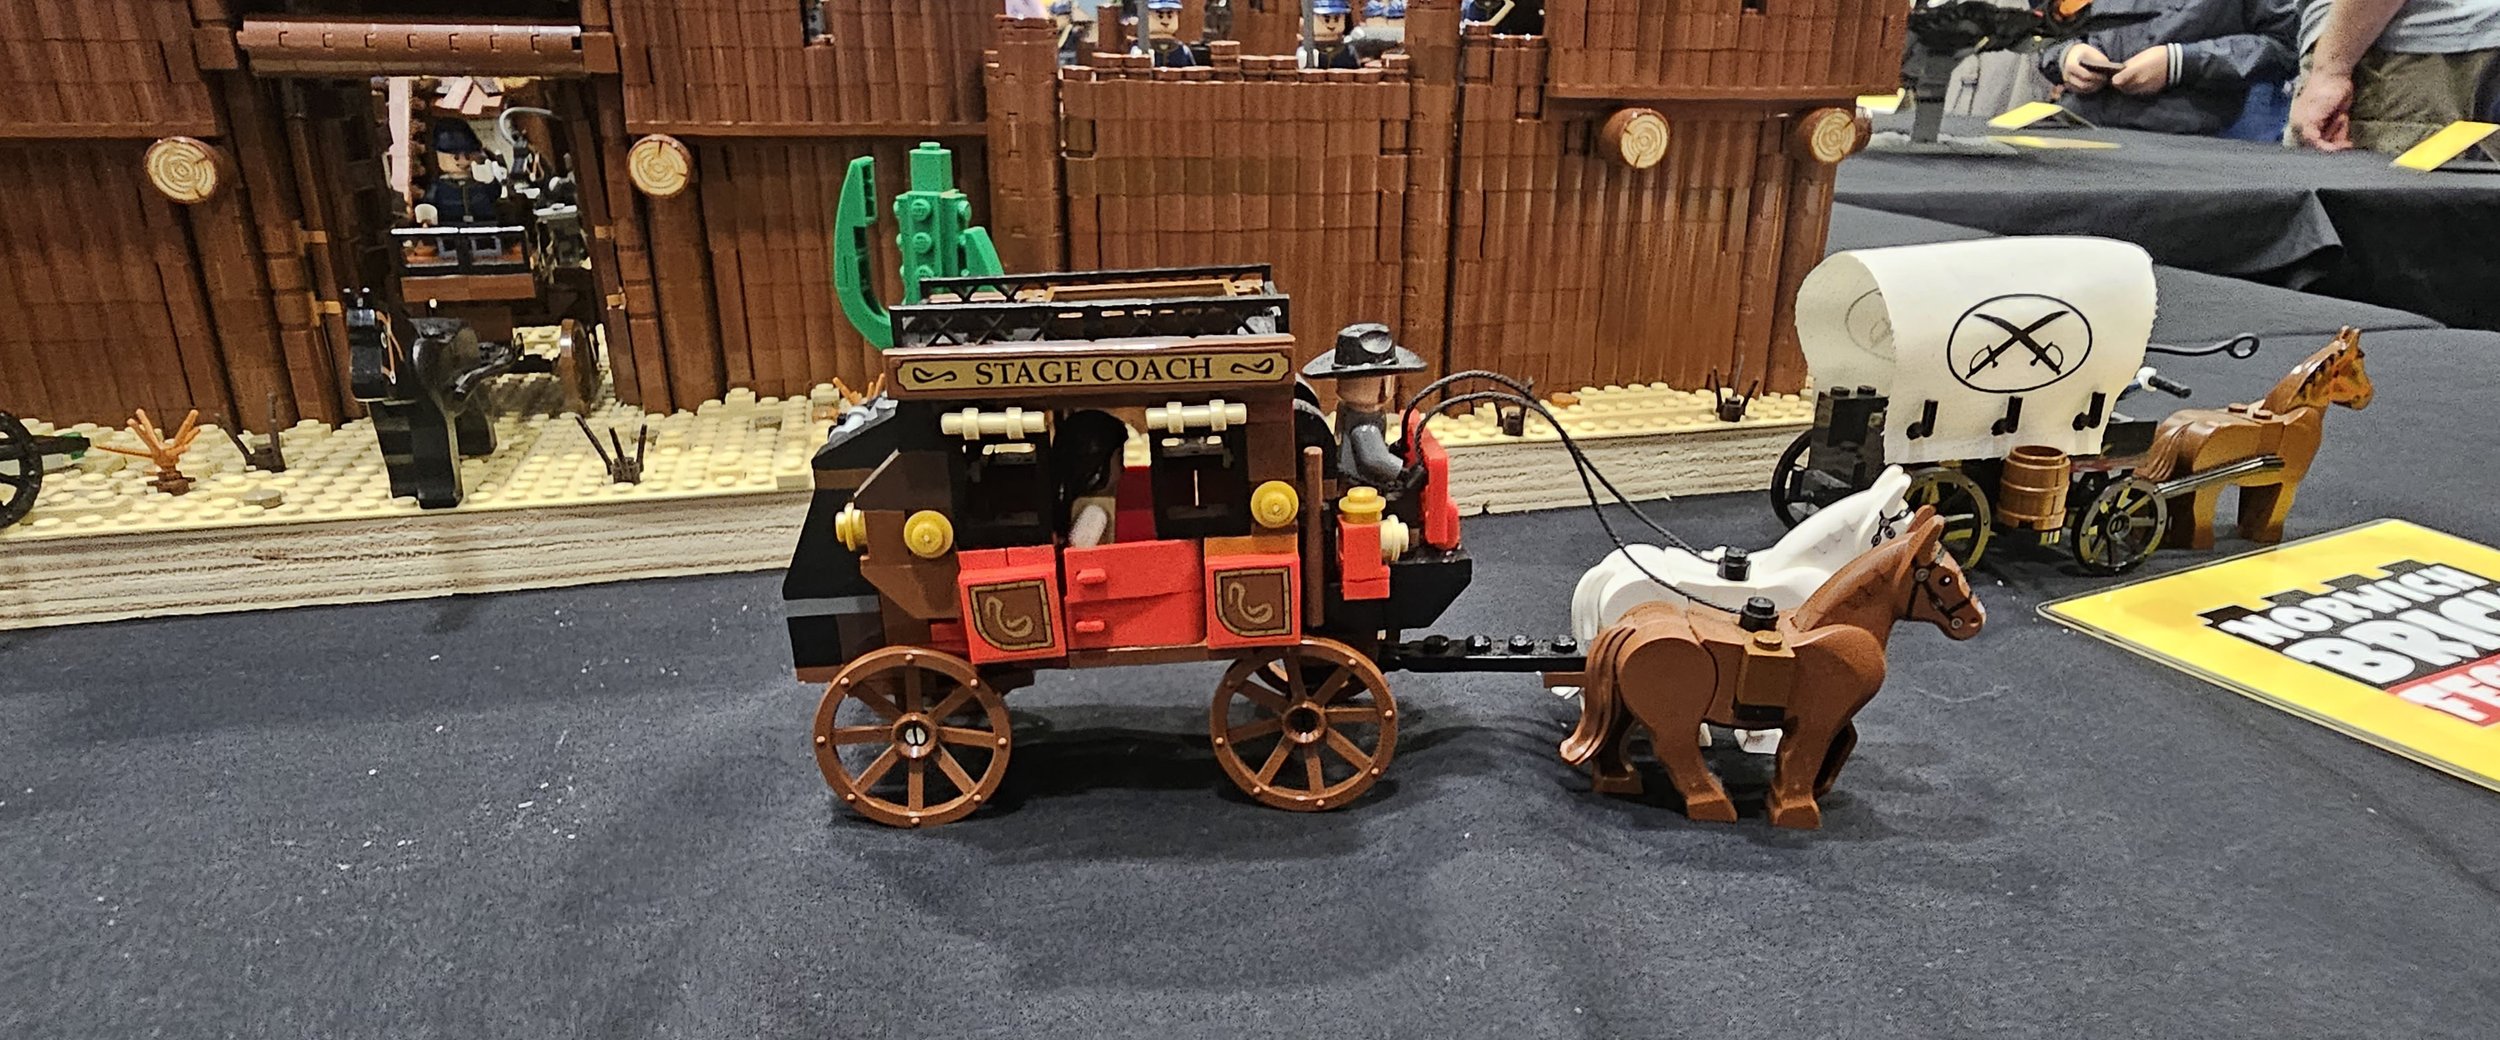 Lego Festival Norwich (7).jpg